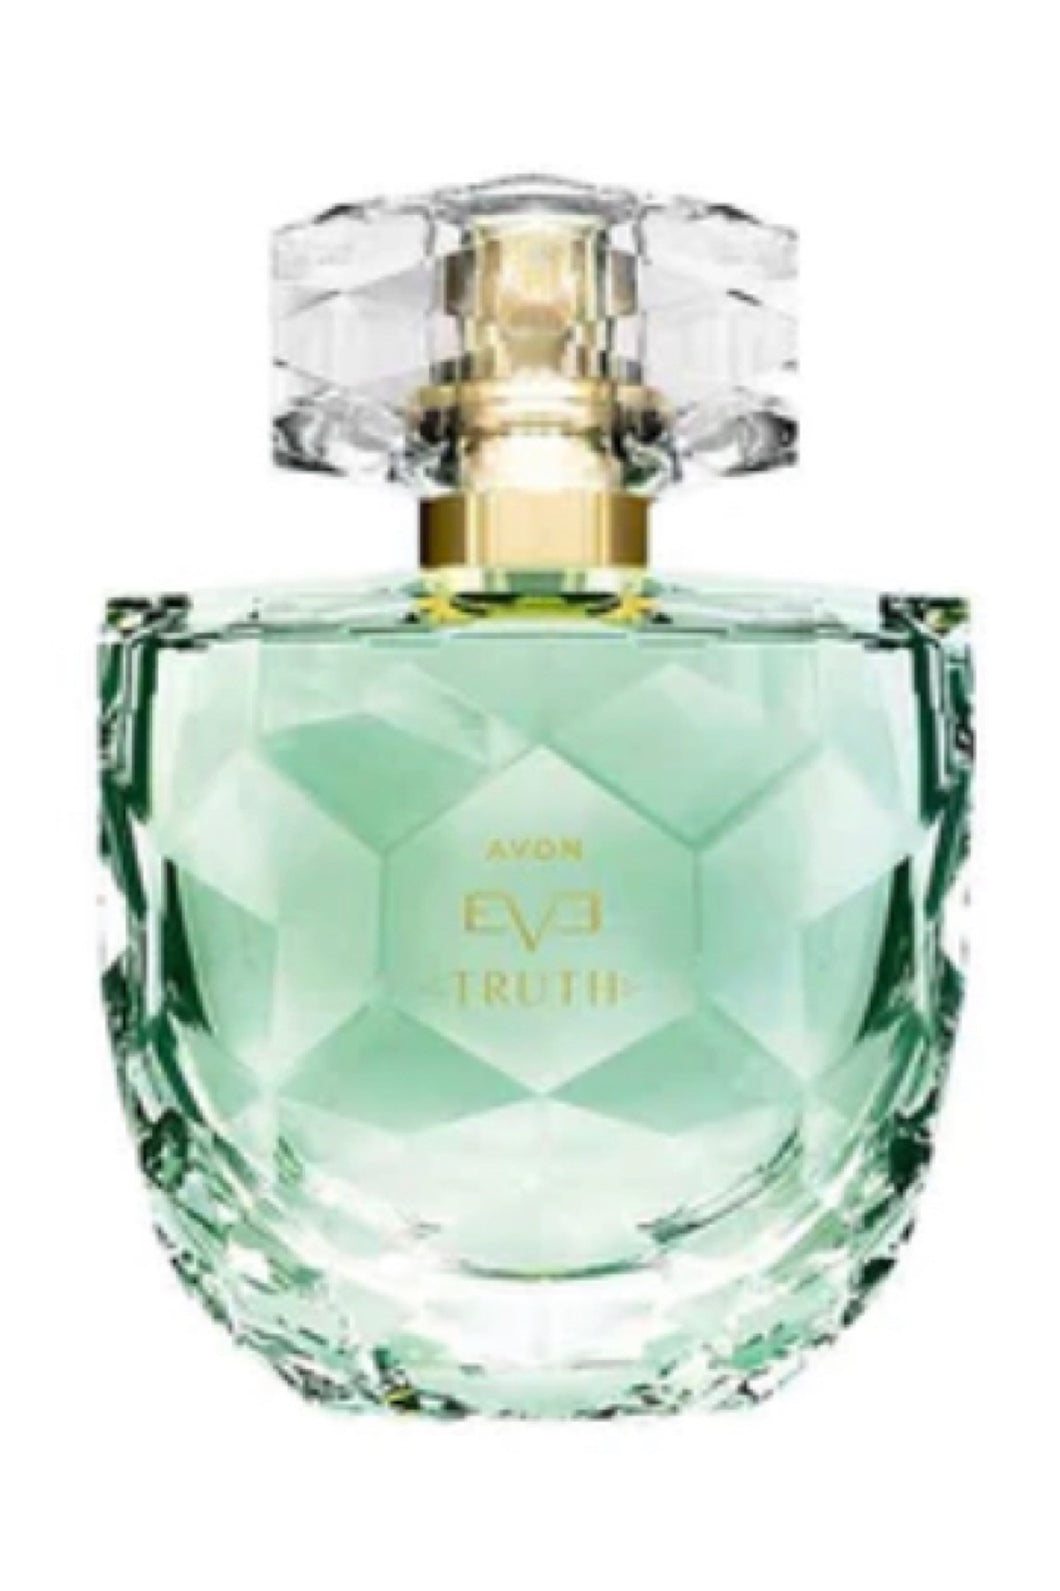 Avon Eve Truth Eau de Parfum 50ml